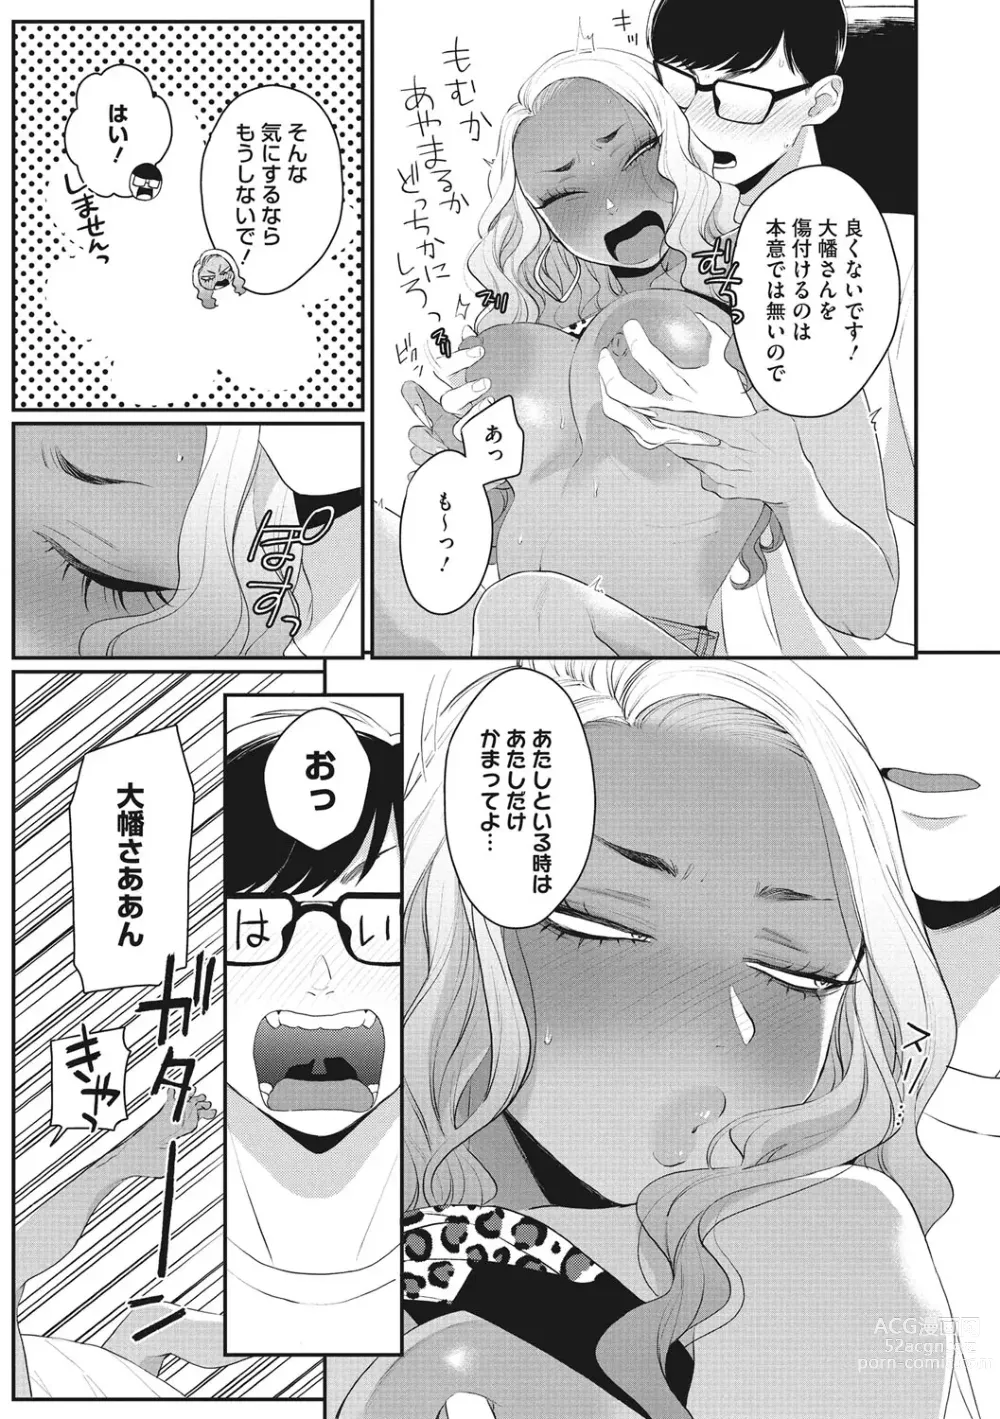 Page 208 of manga Kuro Gal  a La Carte